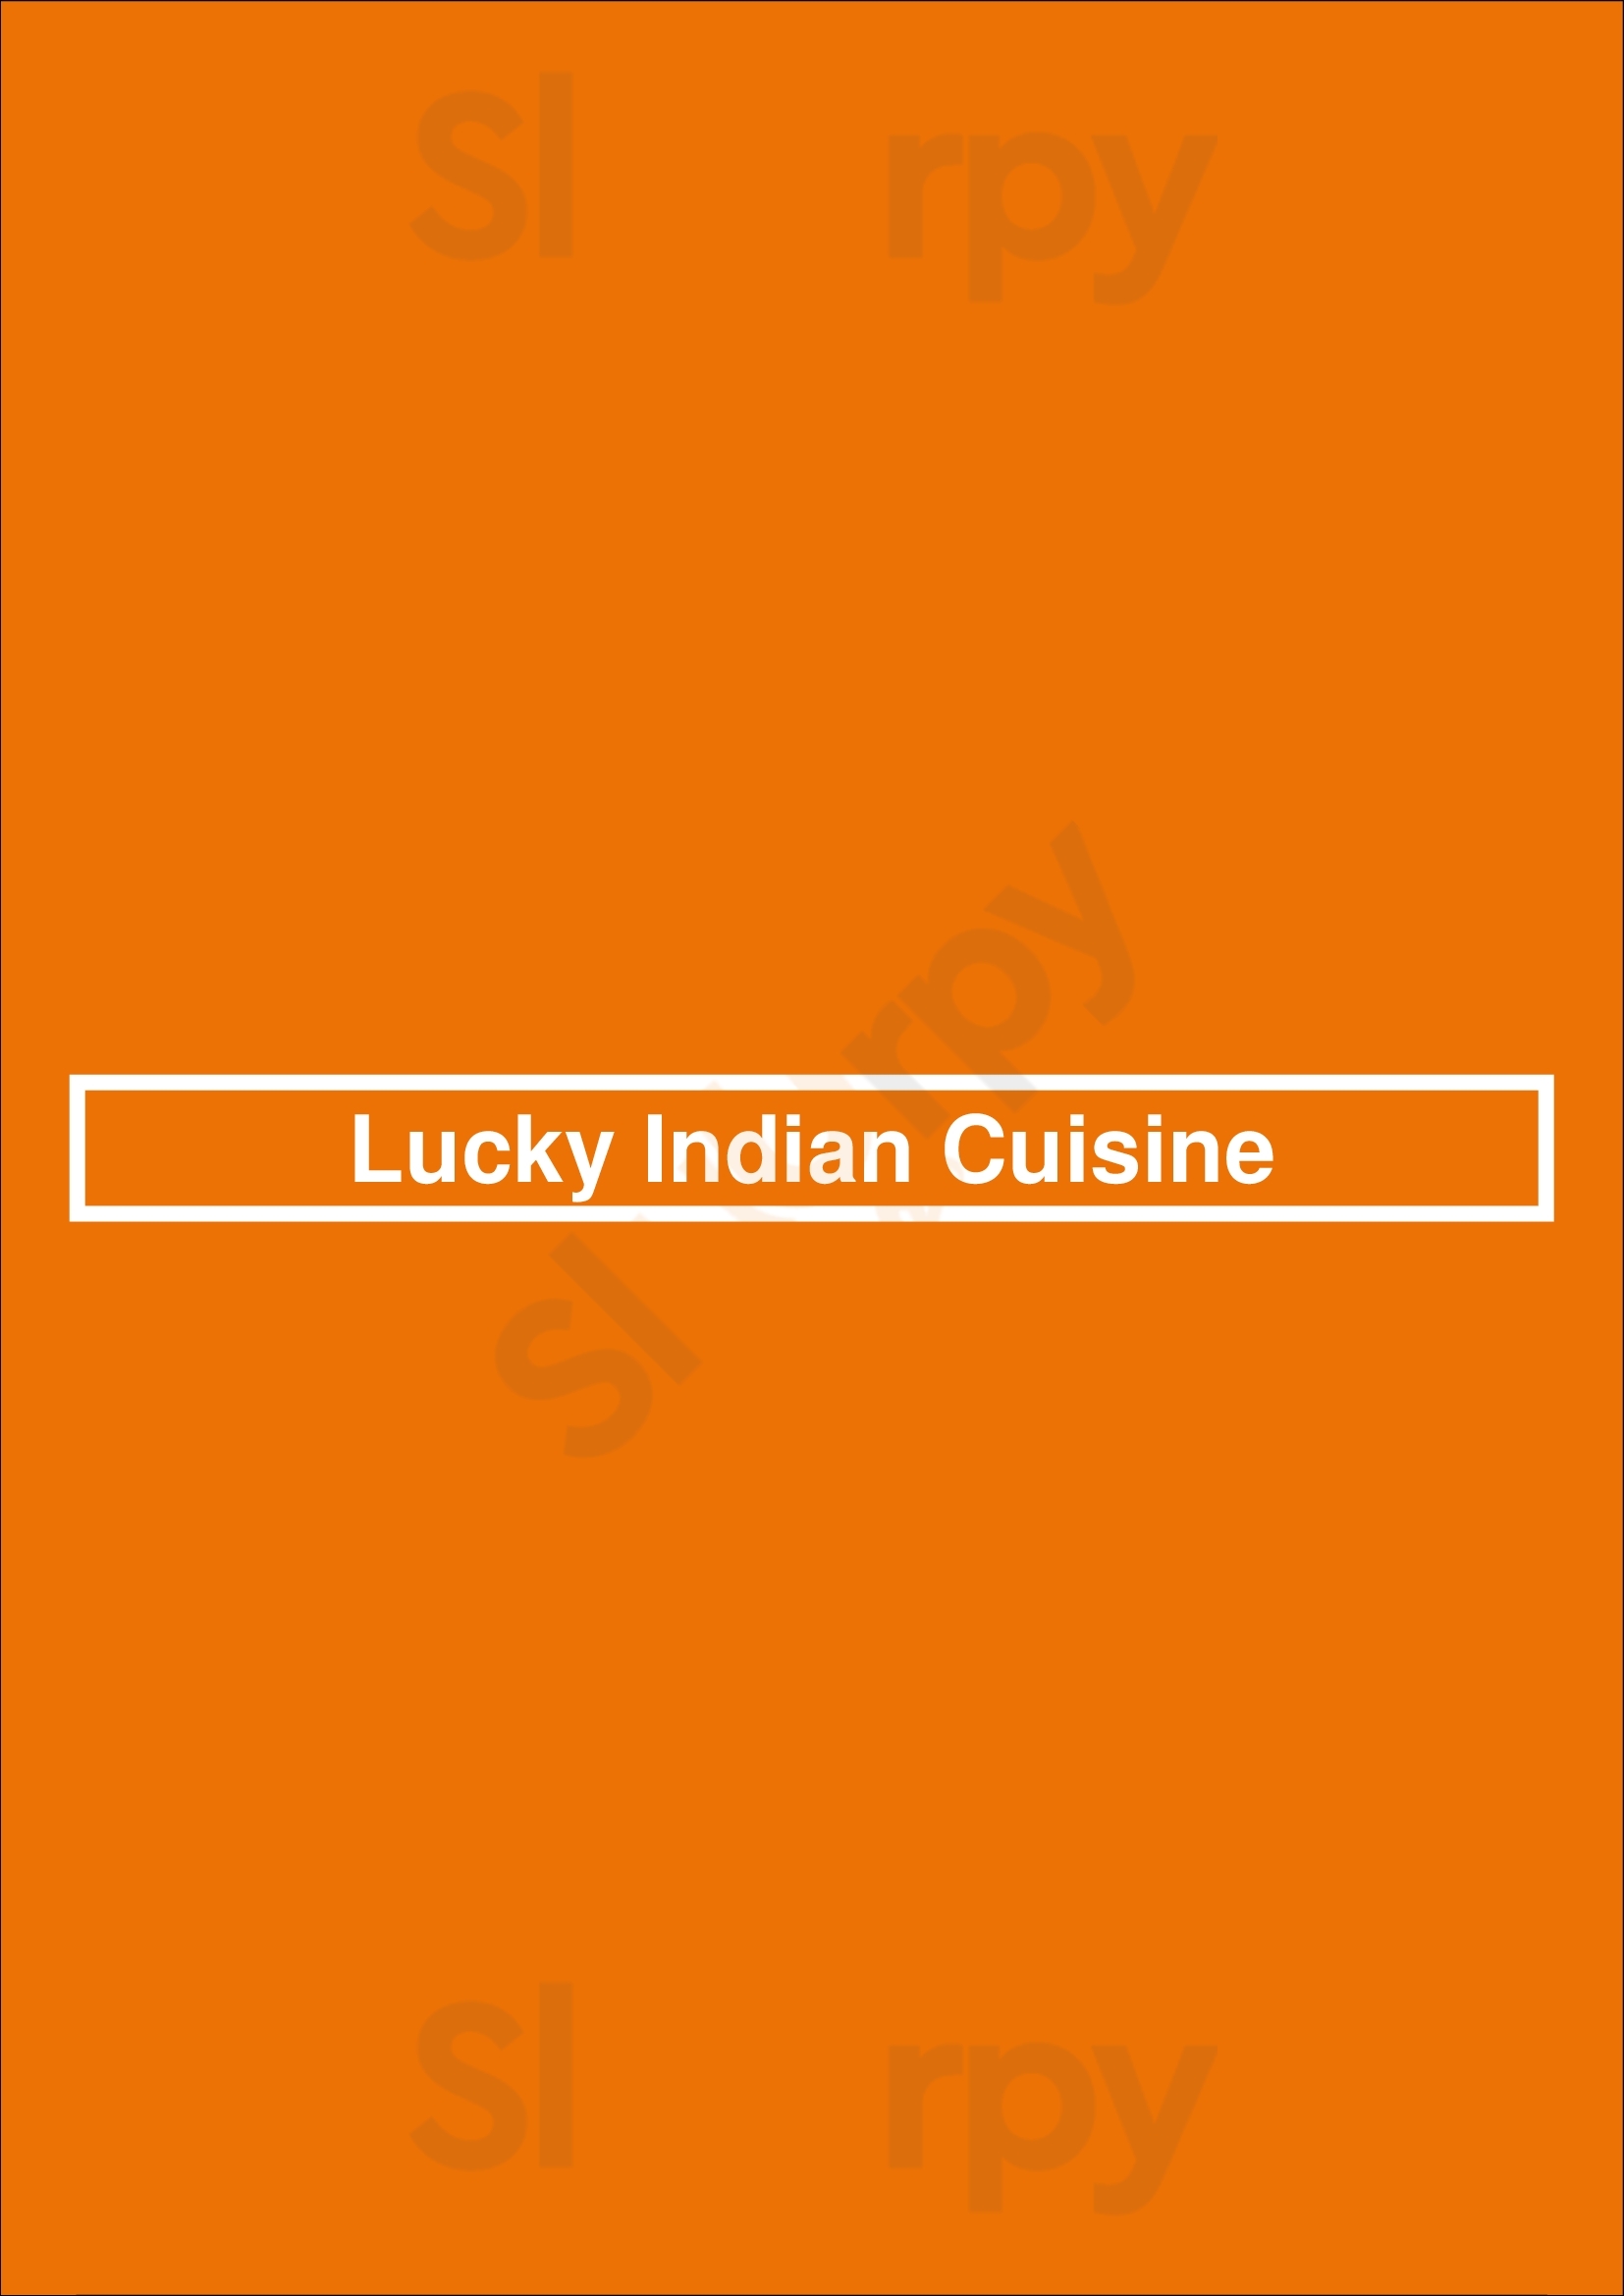 Lucky Indian Cuisine Kokomo Menu - 1